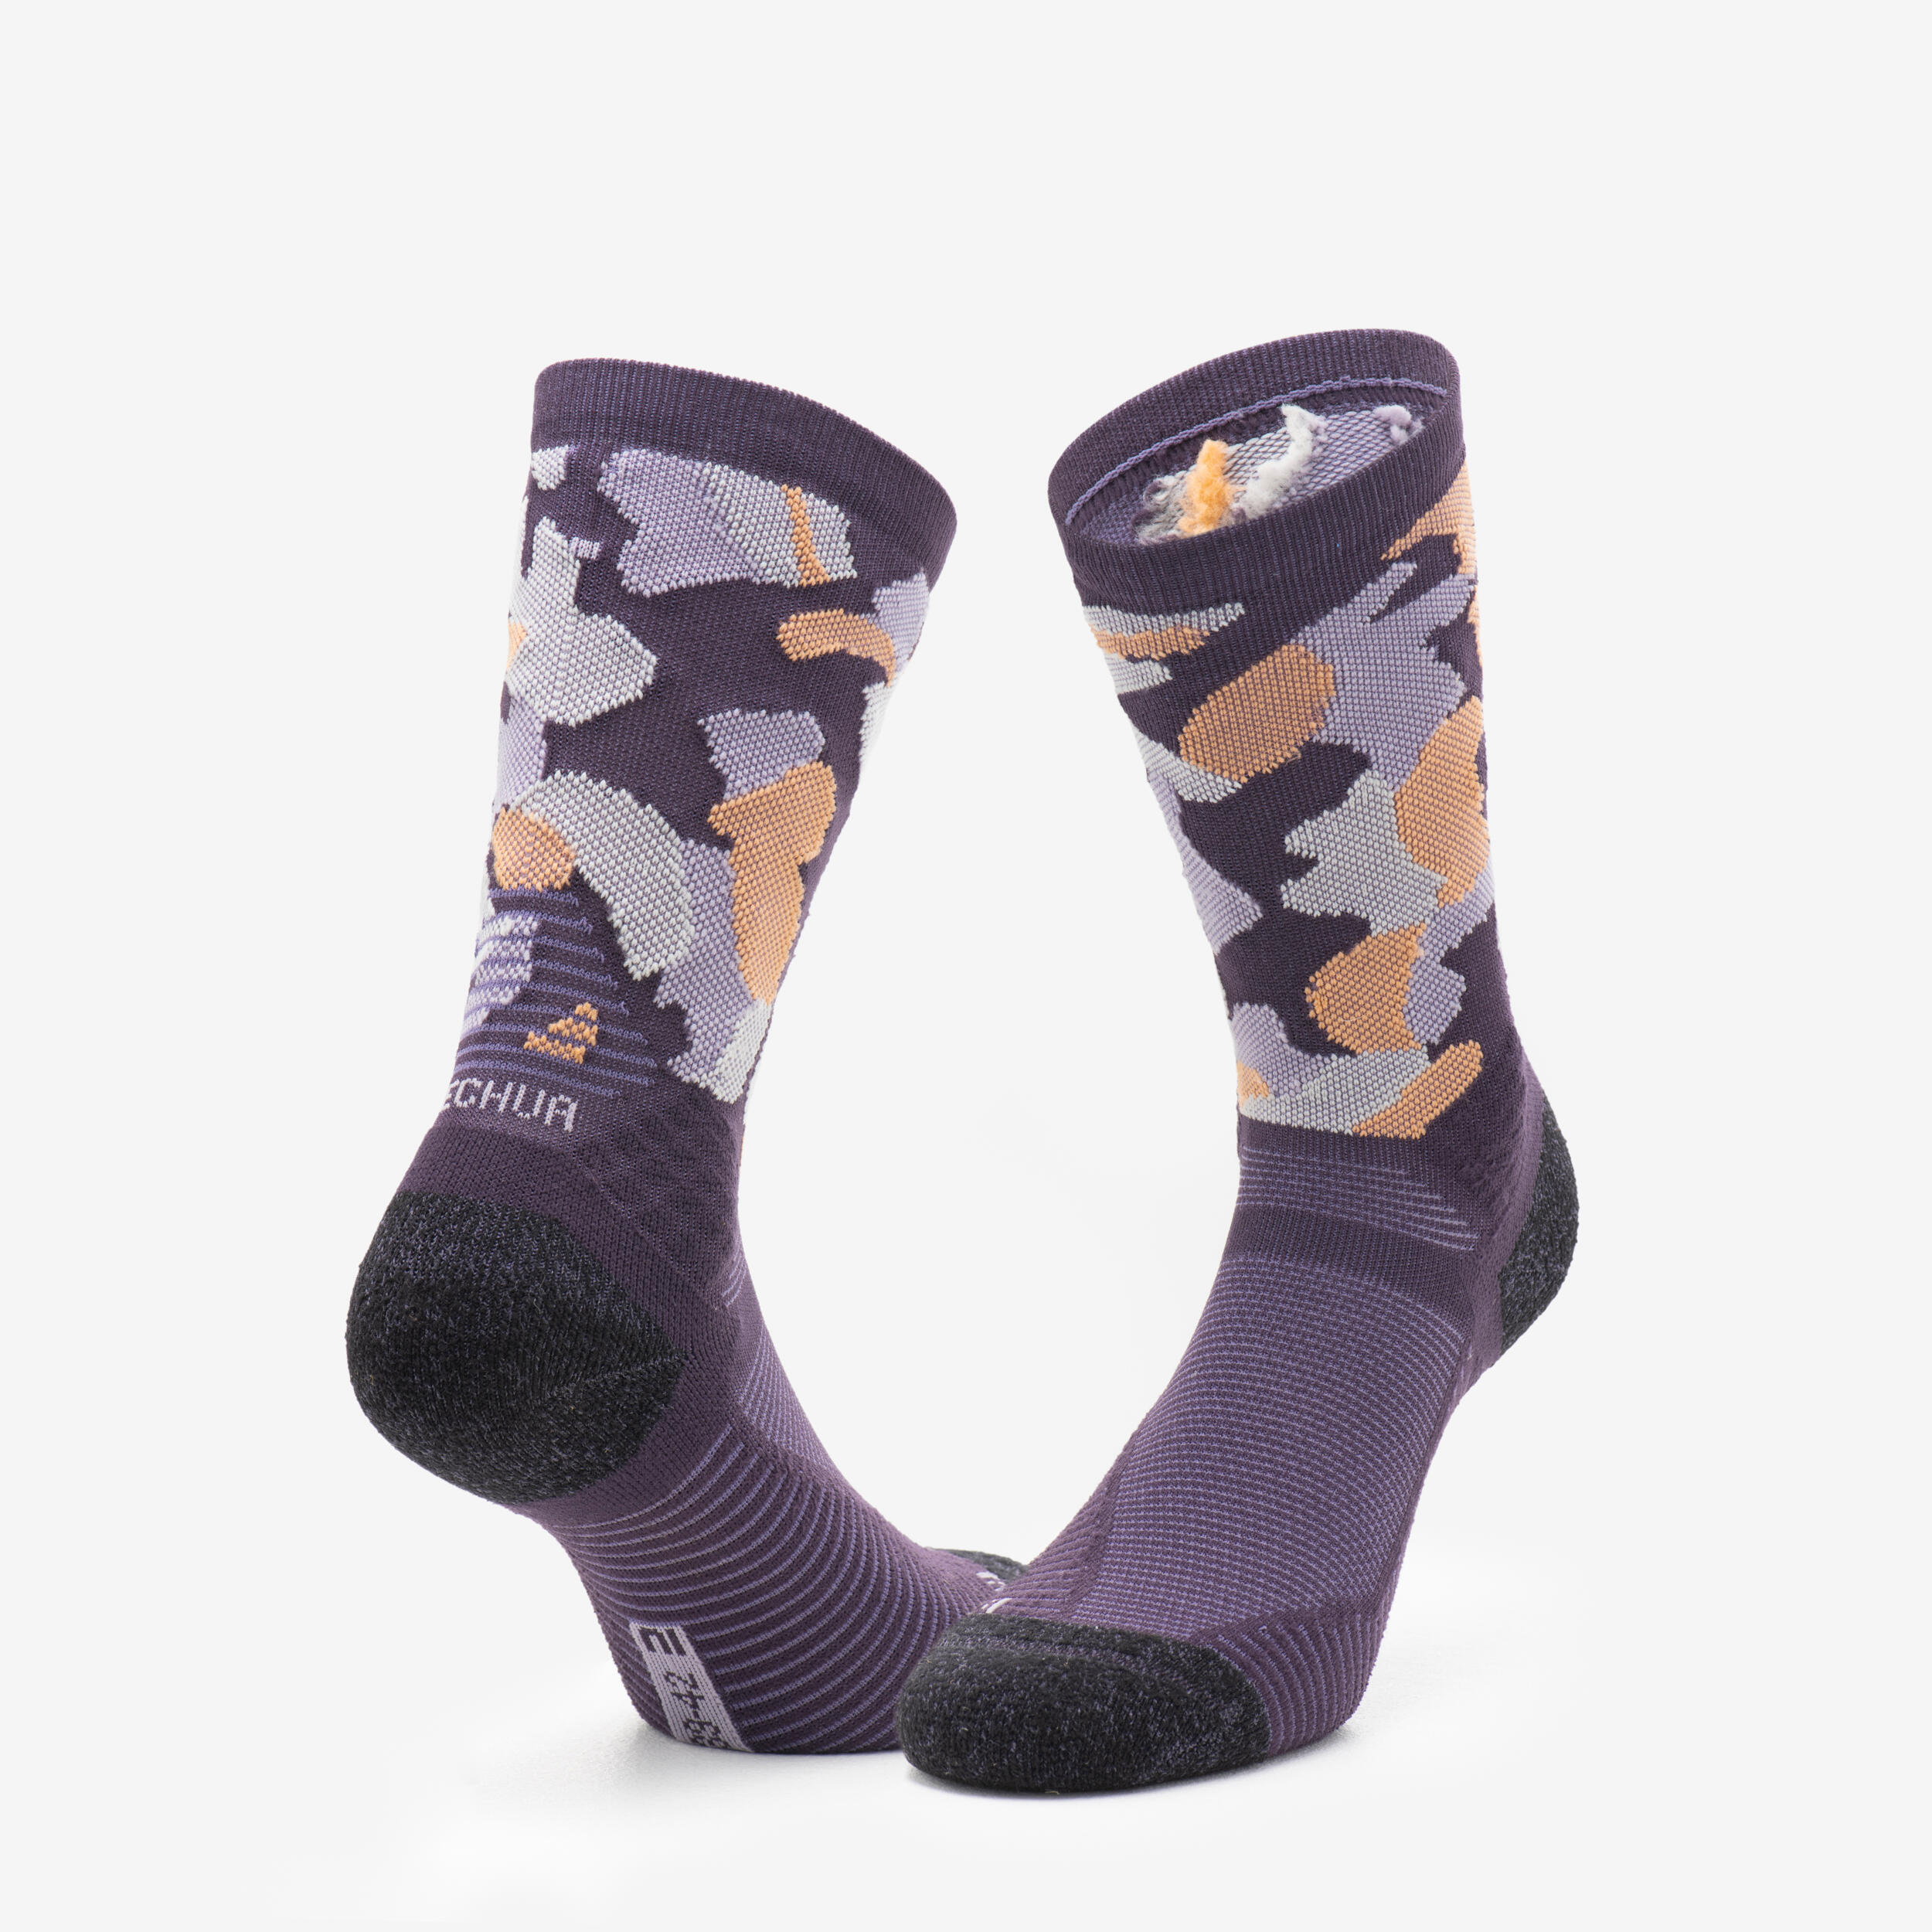 Hiking Socks Hike 500 High Trendy x2 Pairs - Purple & Kamo 4/13